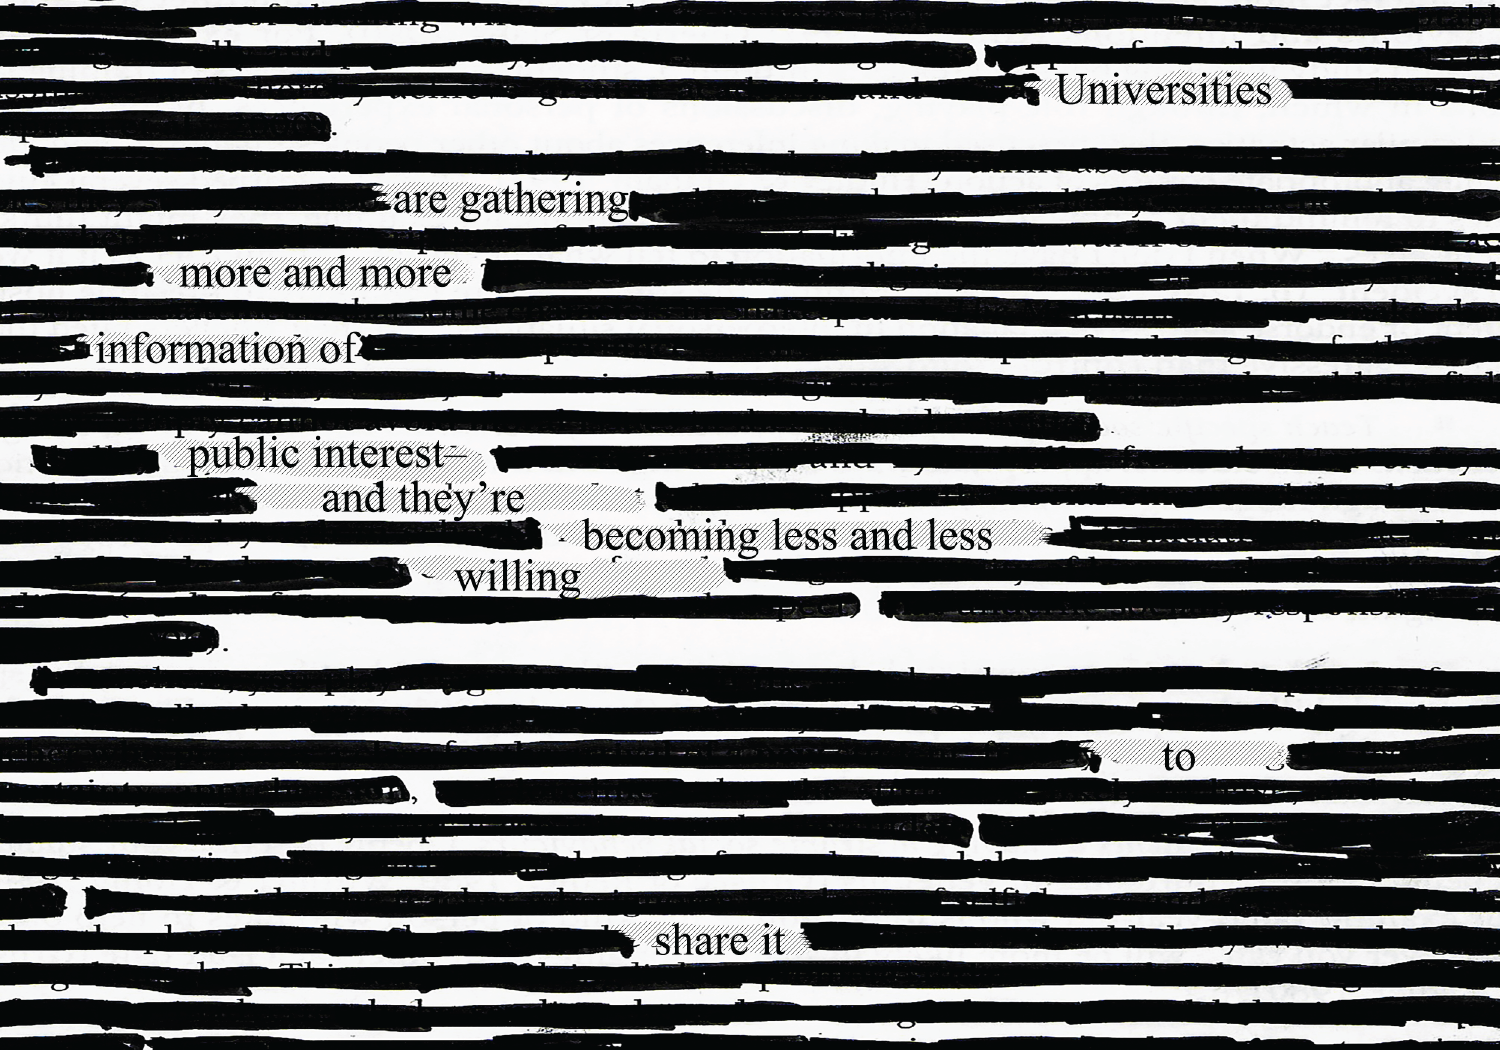 redacted information